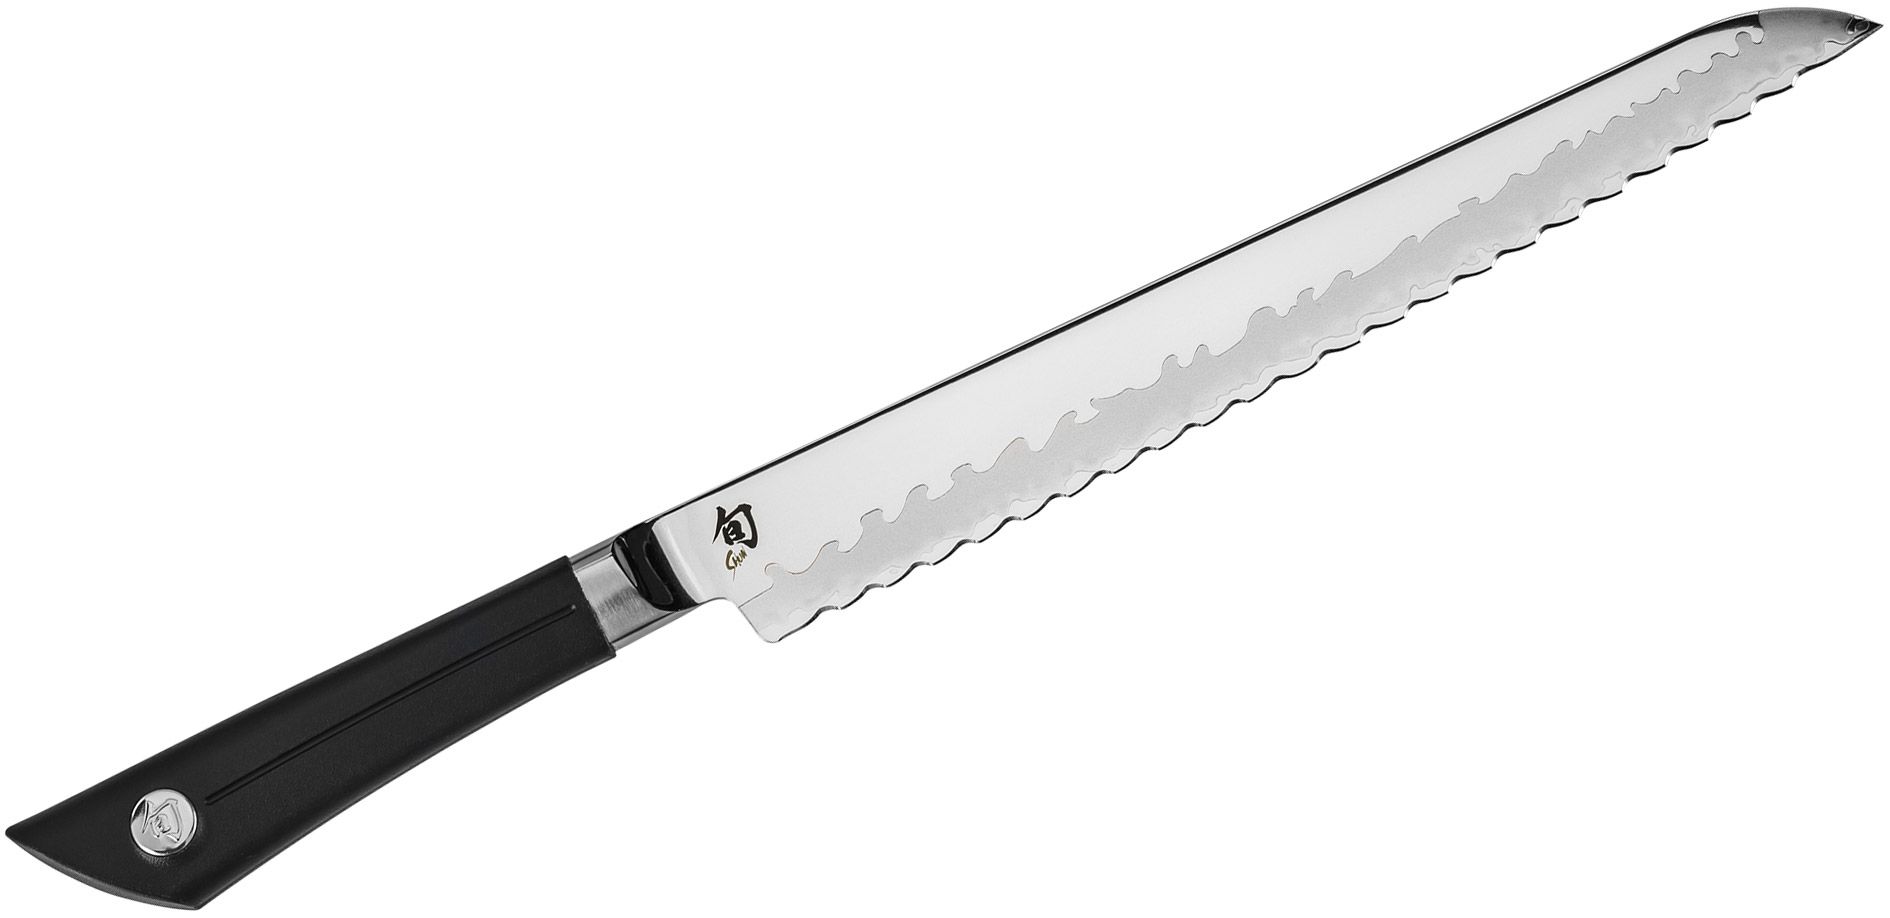 Shun 9 Multi-Purpose Shears (DM7300) - KnifeCenter